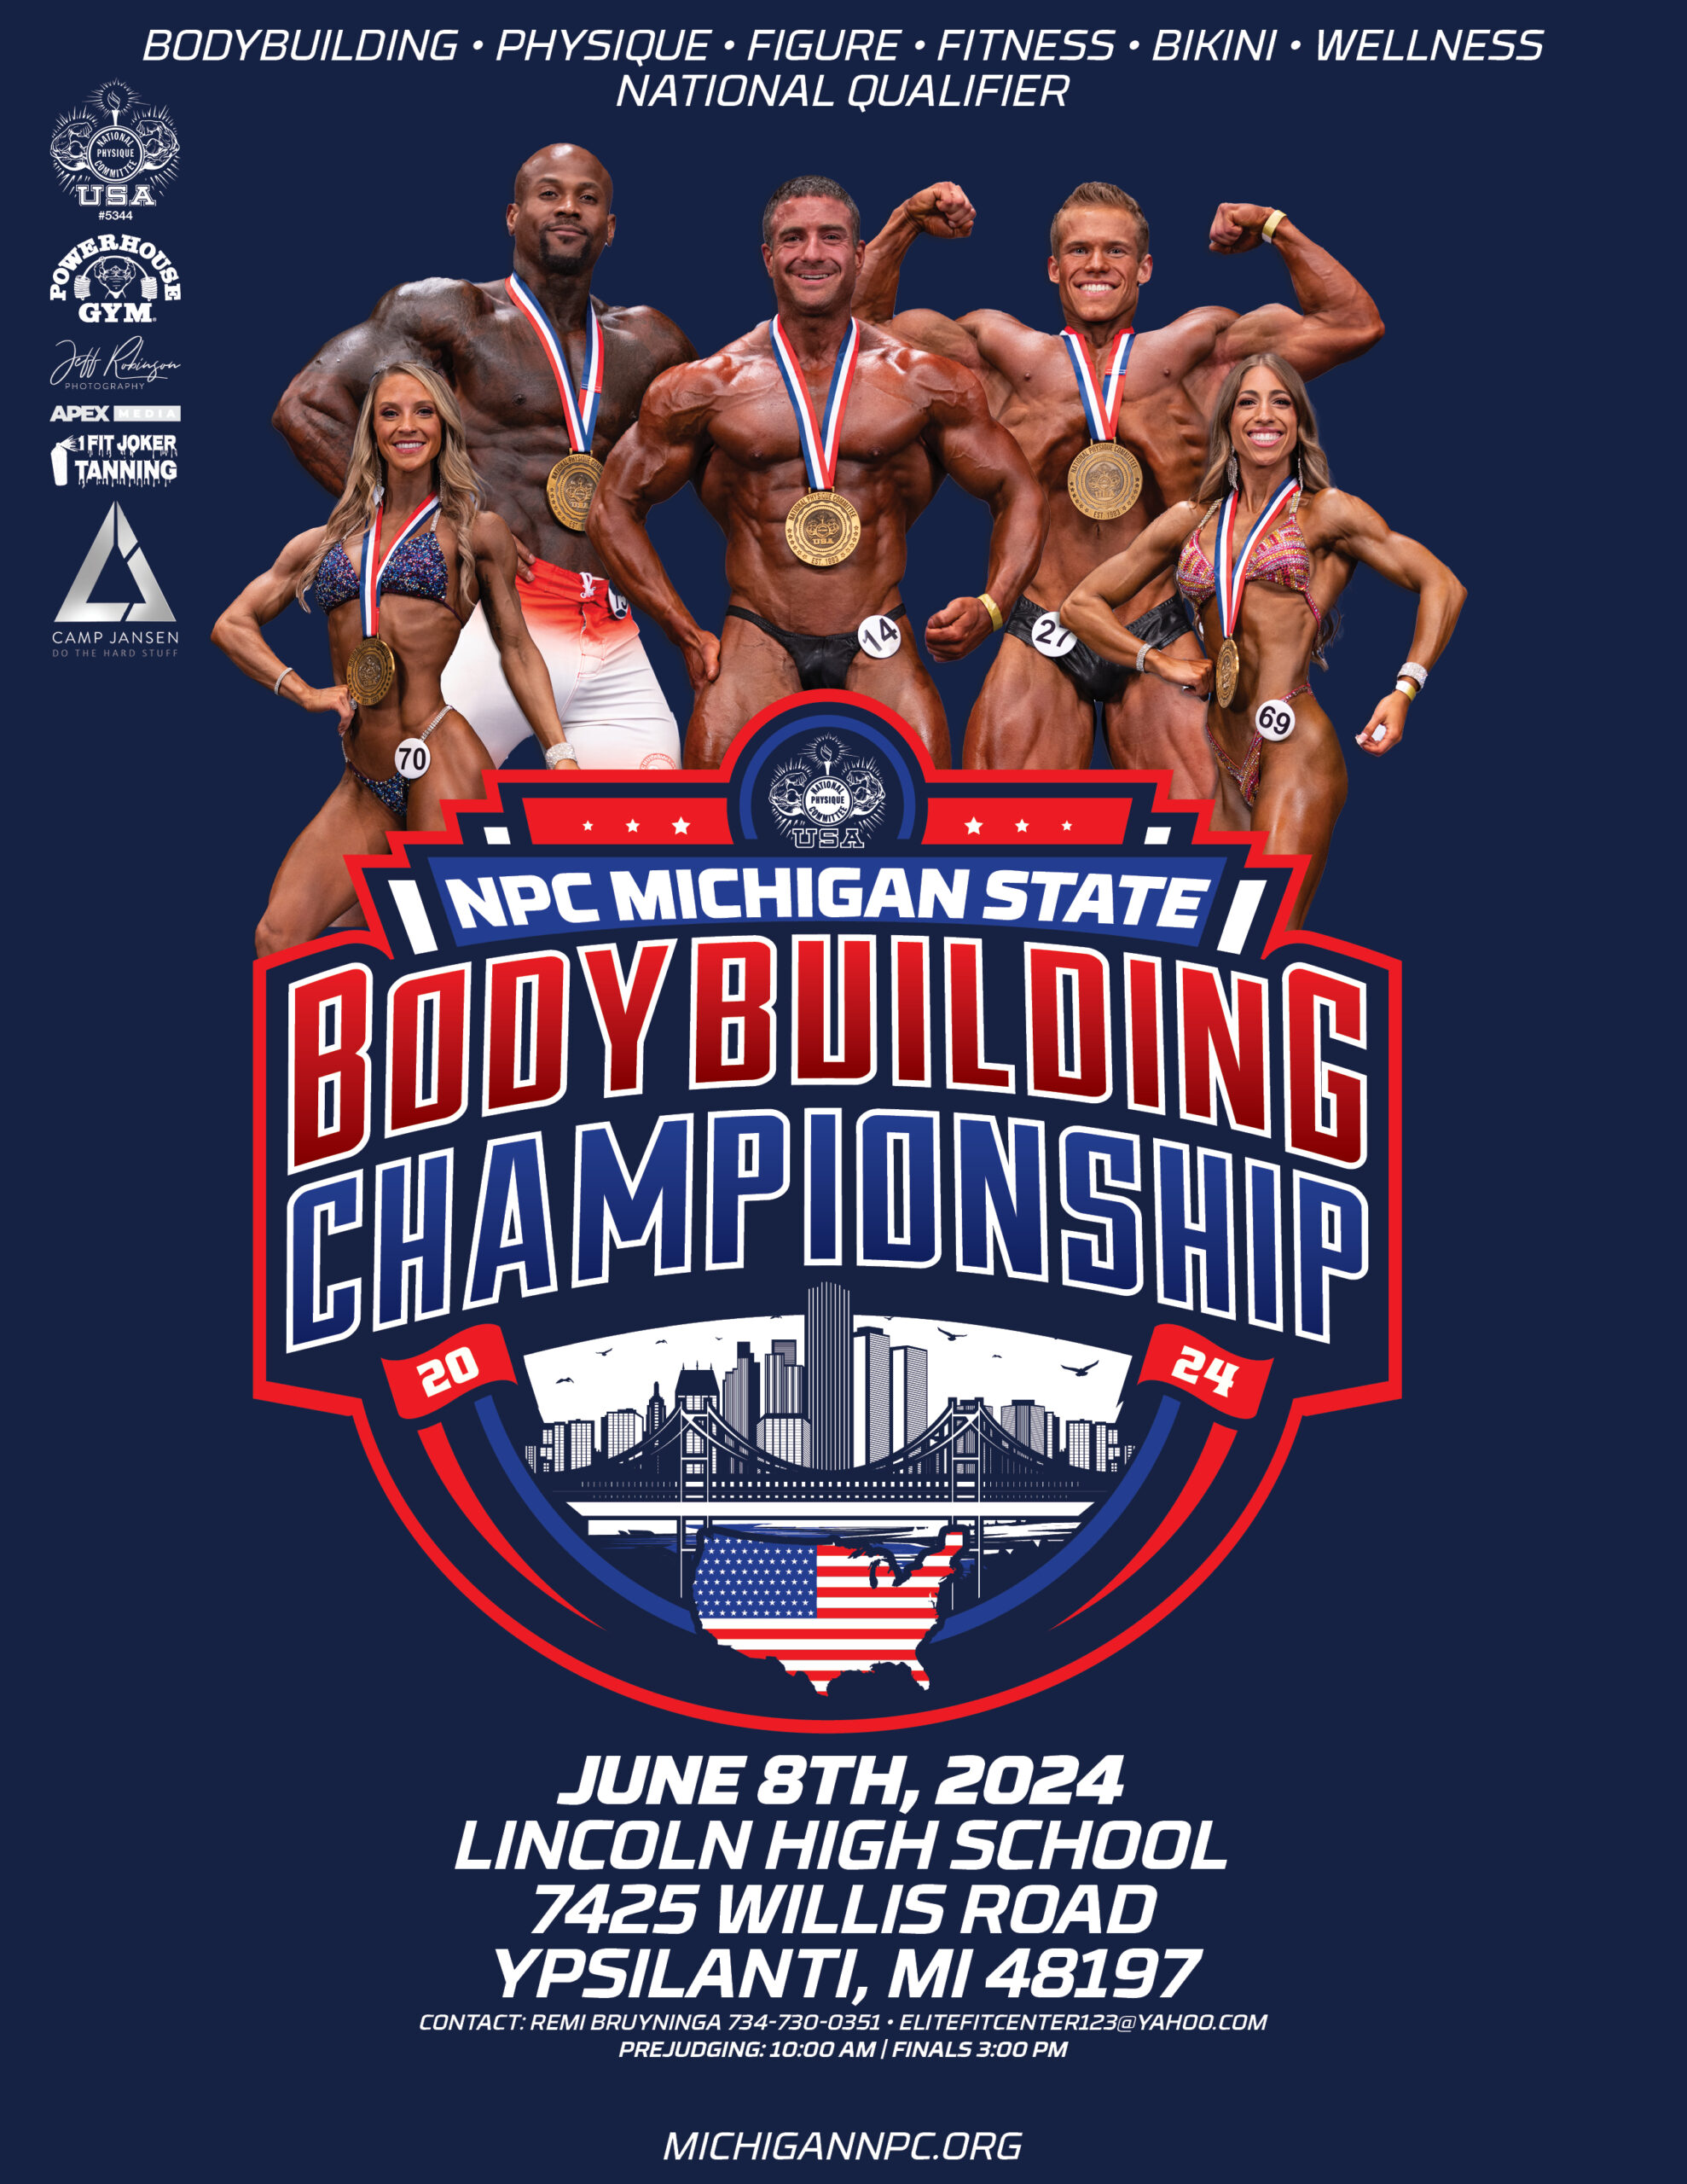 NPC Michigan State Bodybuilding Championships Poster